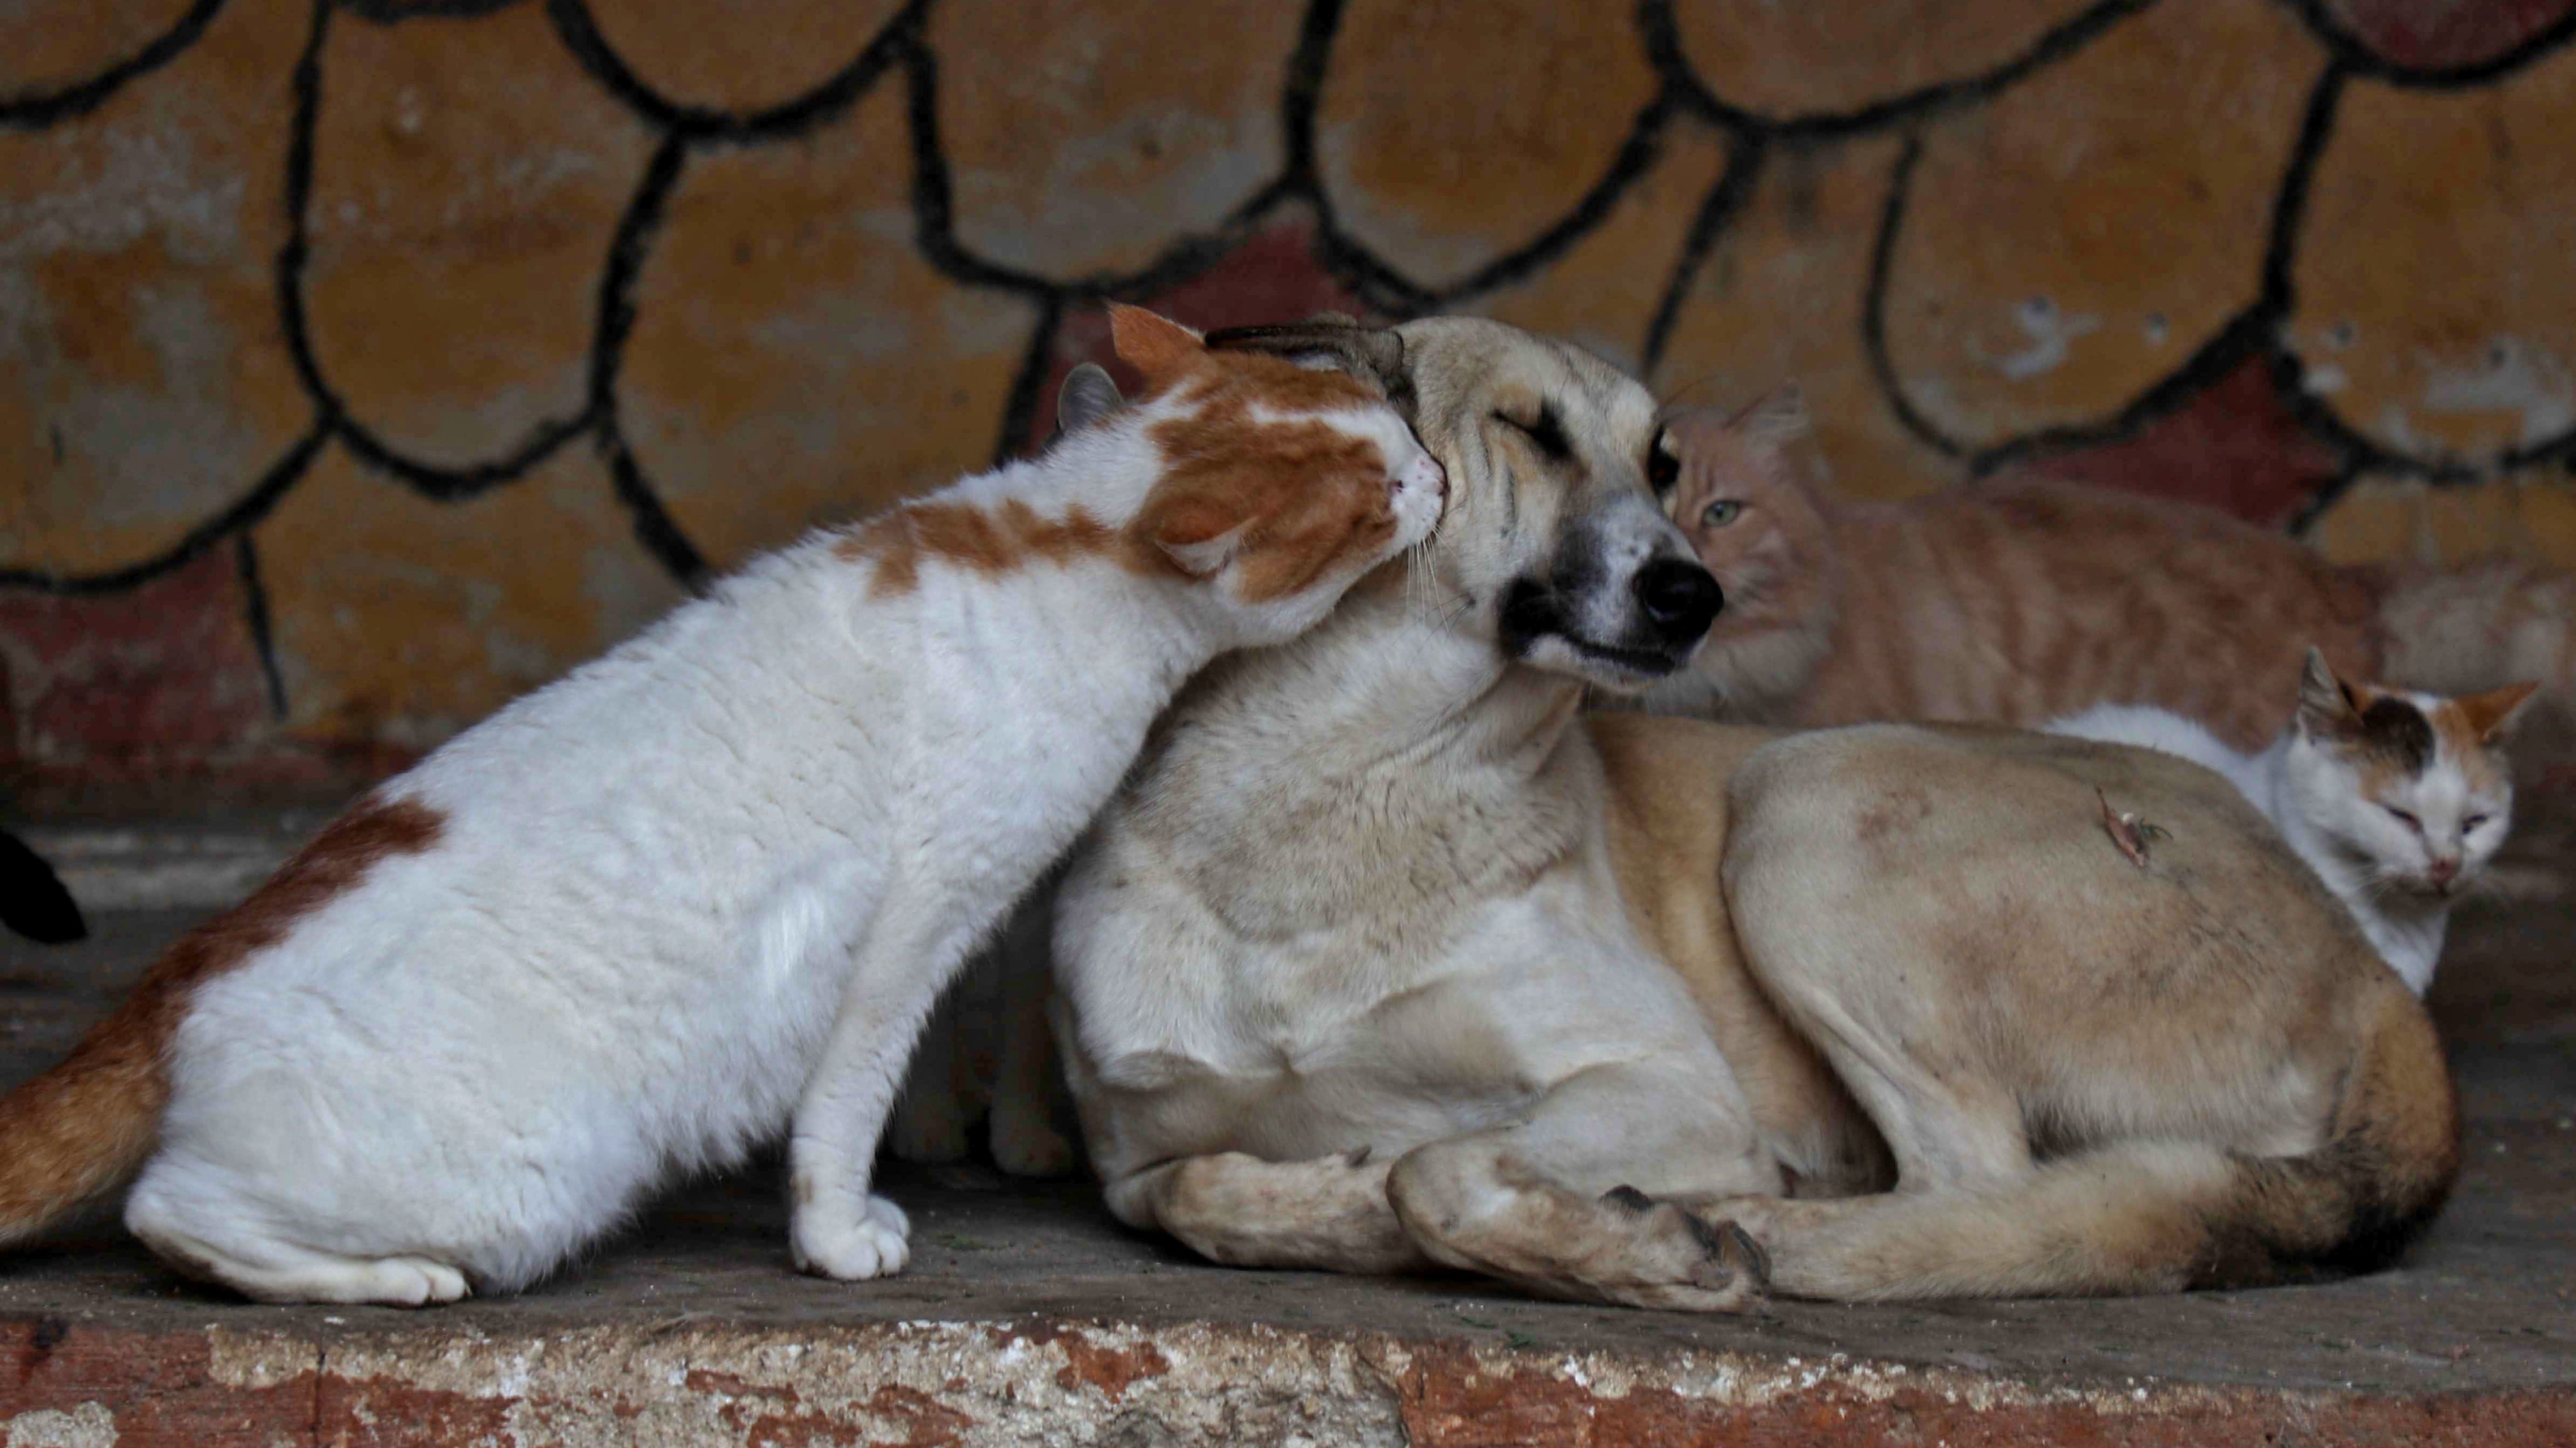 SYRIA-ANIMAL-CATS